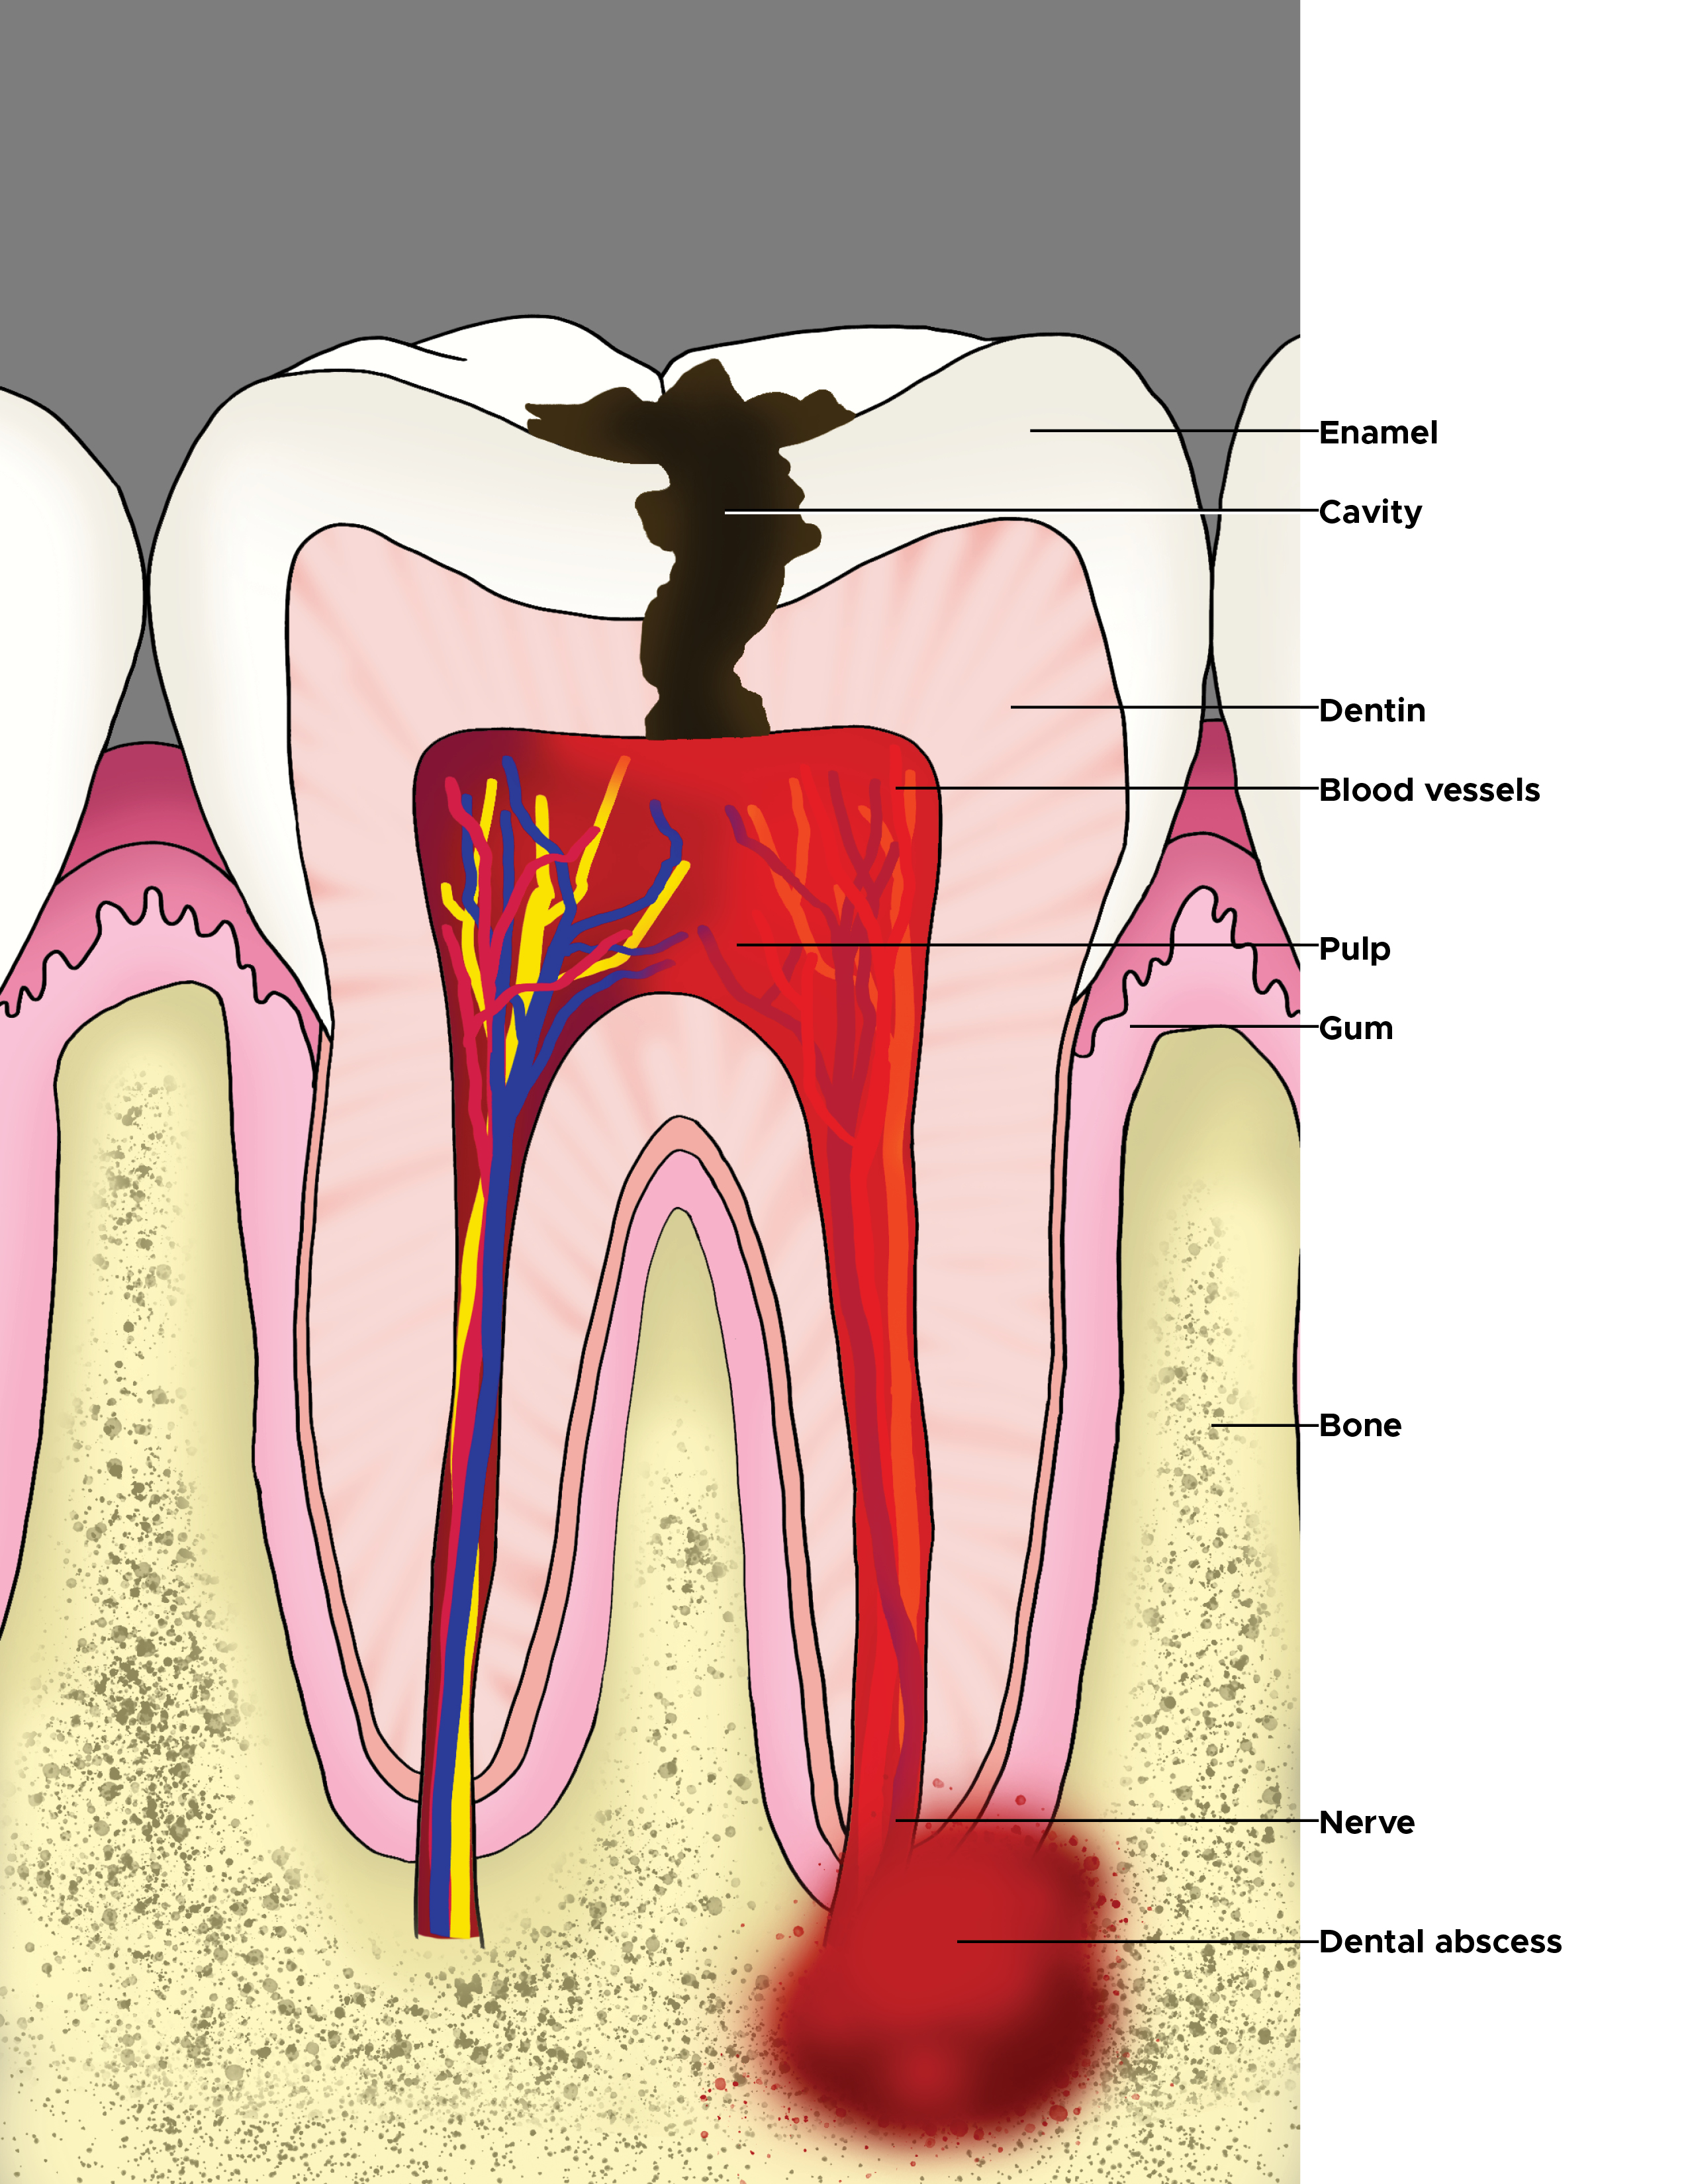 Illustration of molar with cavity and dental abscess. Enamel, cavity, dentin, blood vessels, pulp, gum, bone, nerve